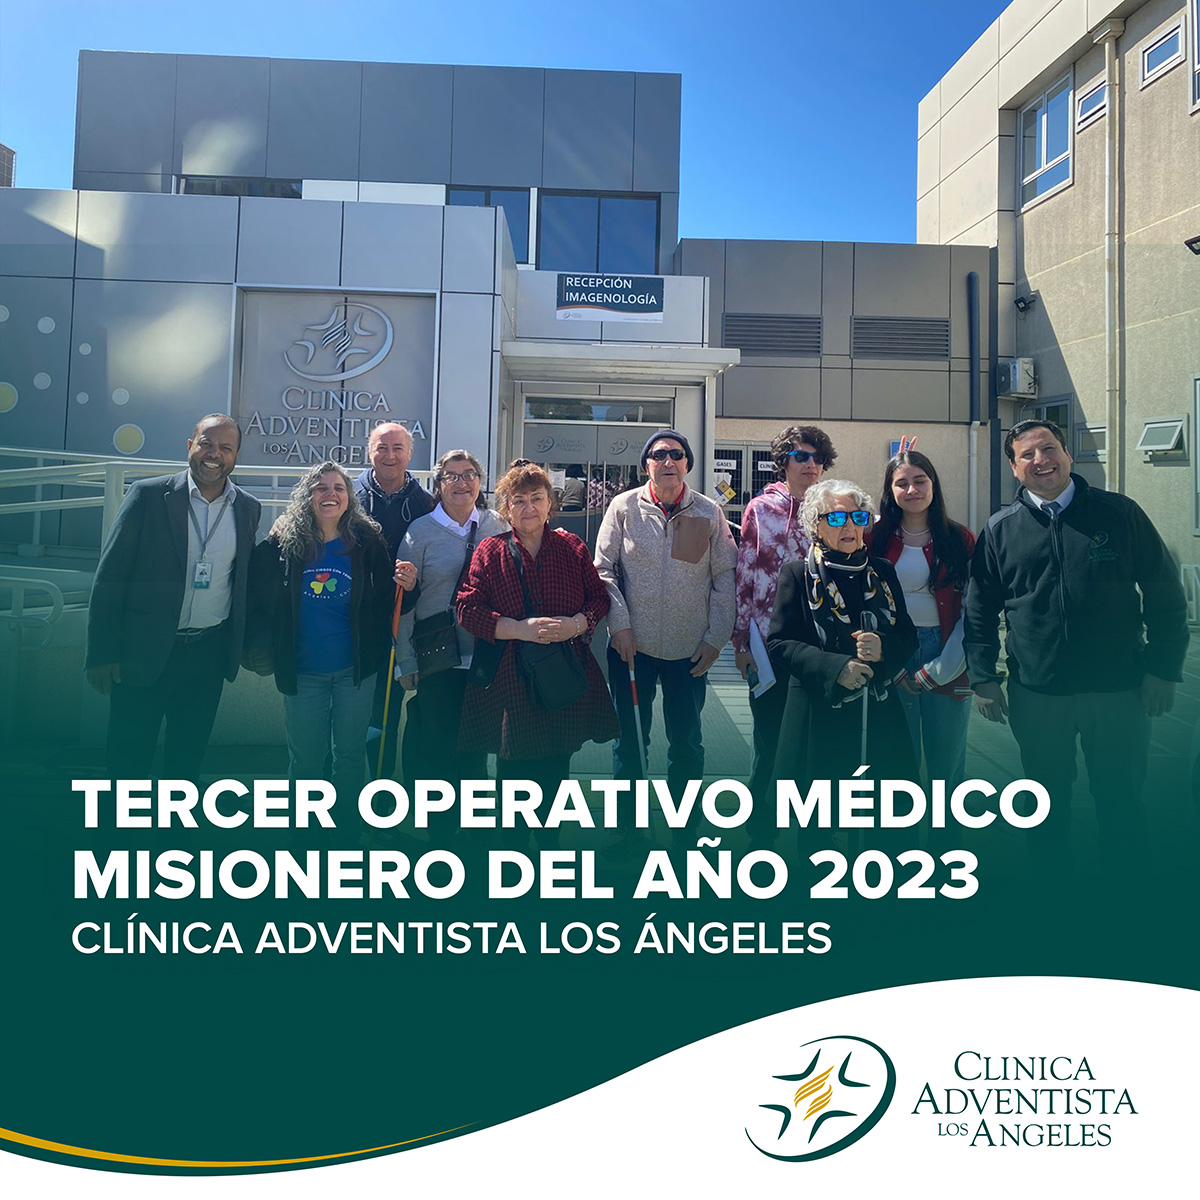 Tercer operativo médico misionero del año 2023